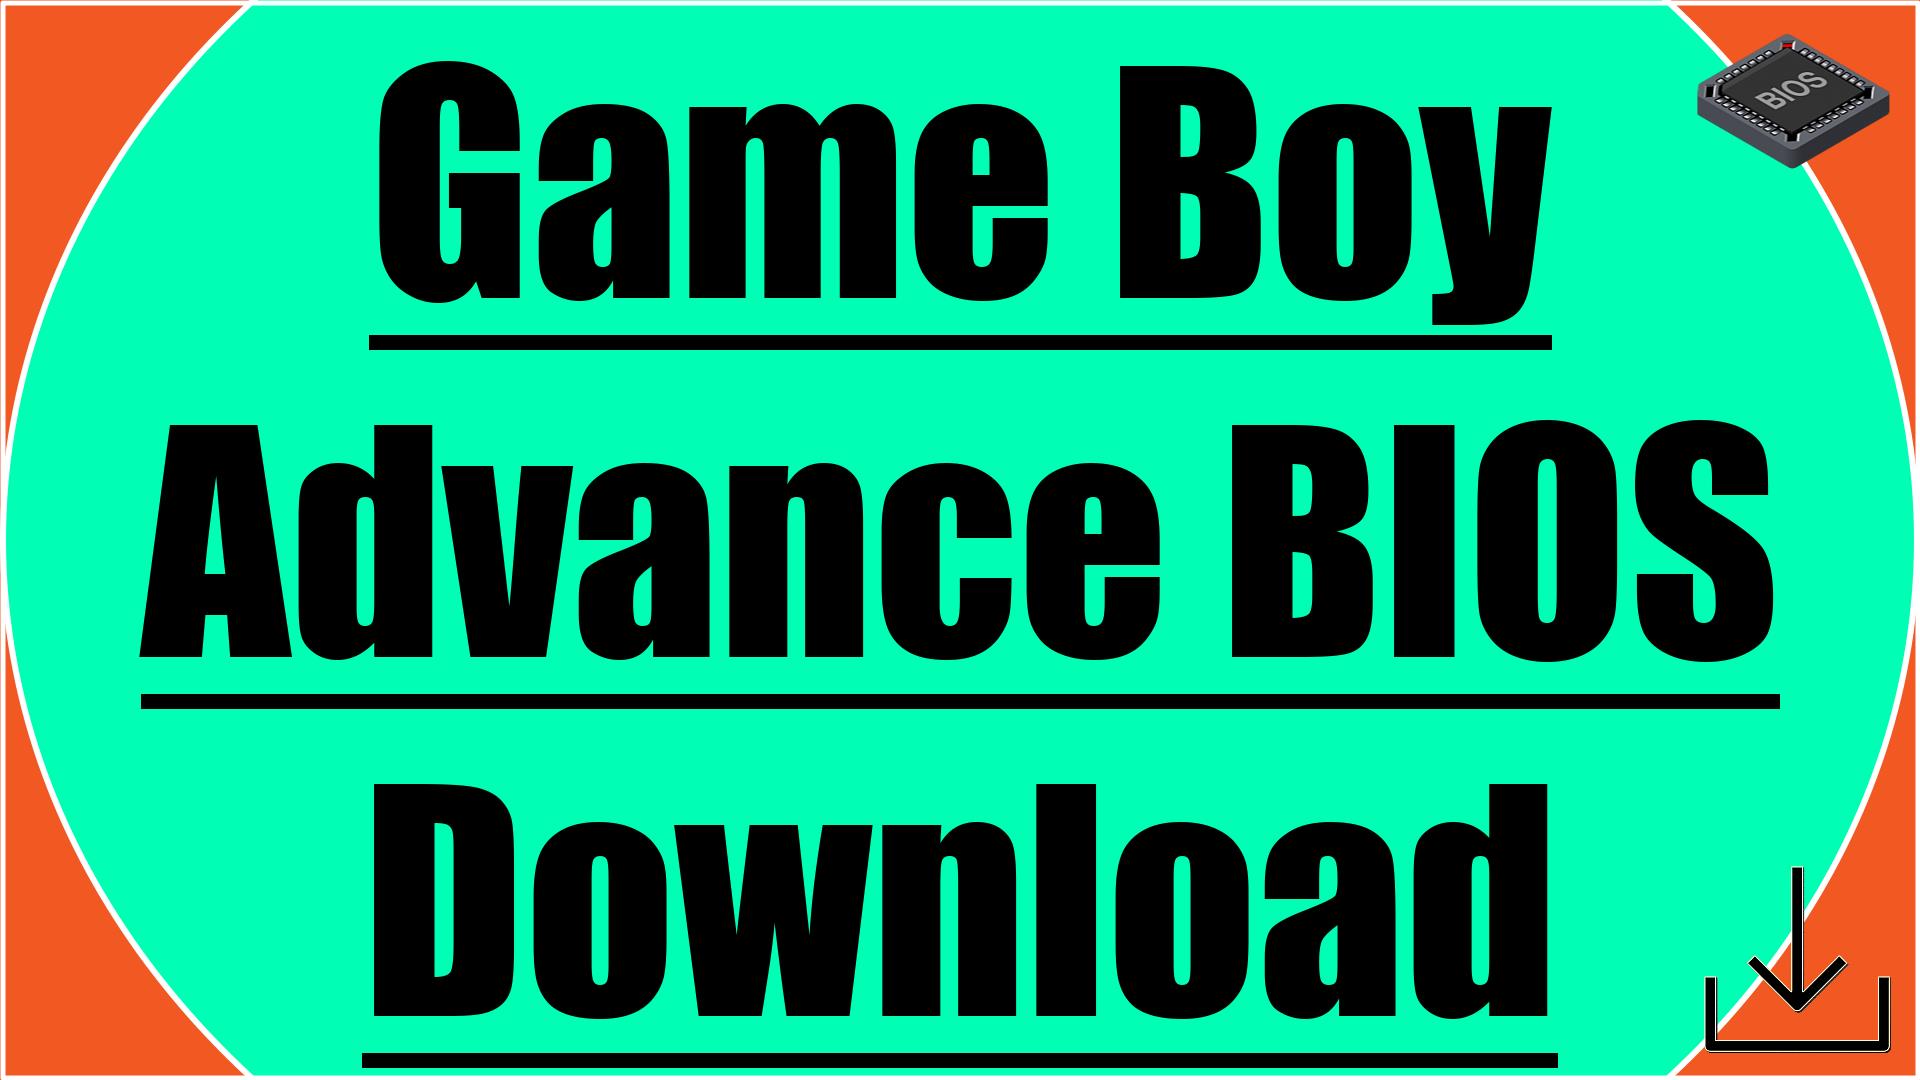 Stream Startup - Game Boy Advance BIOS by Th3Gavst3r